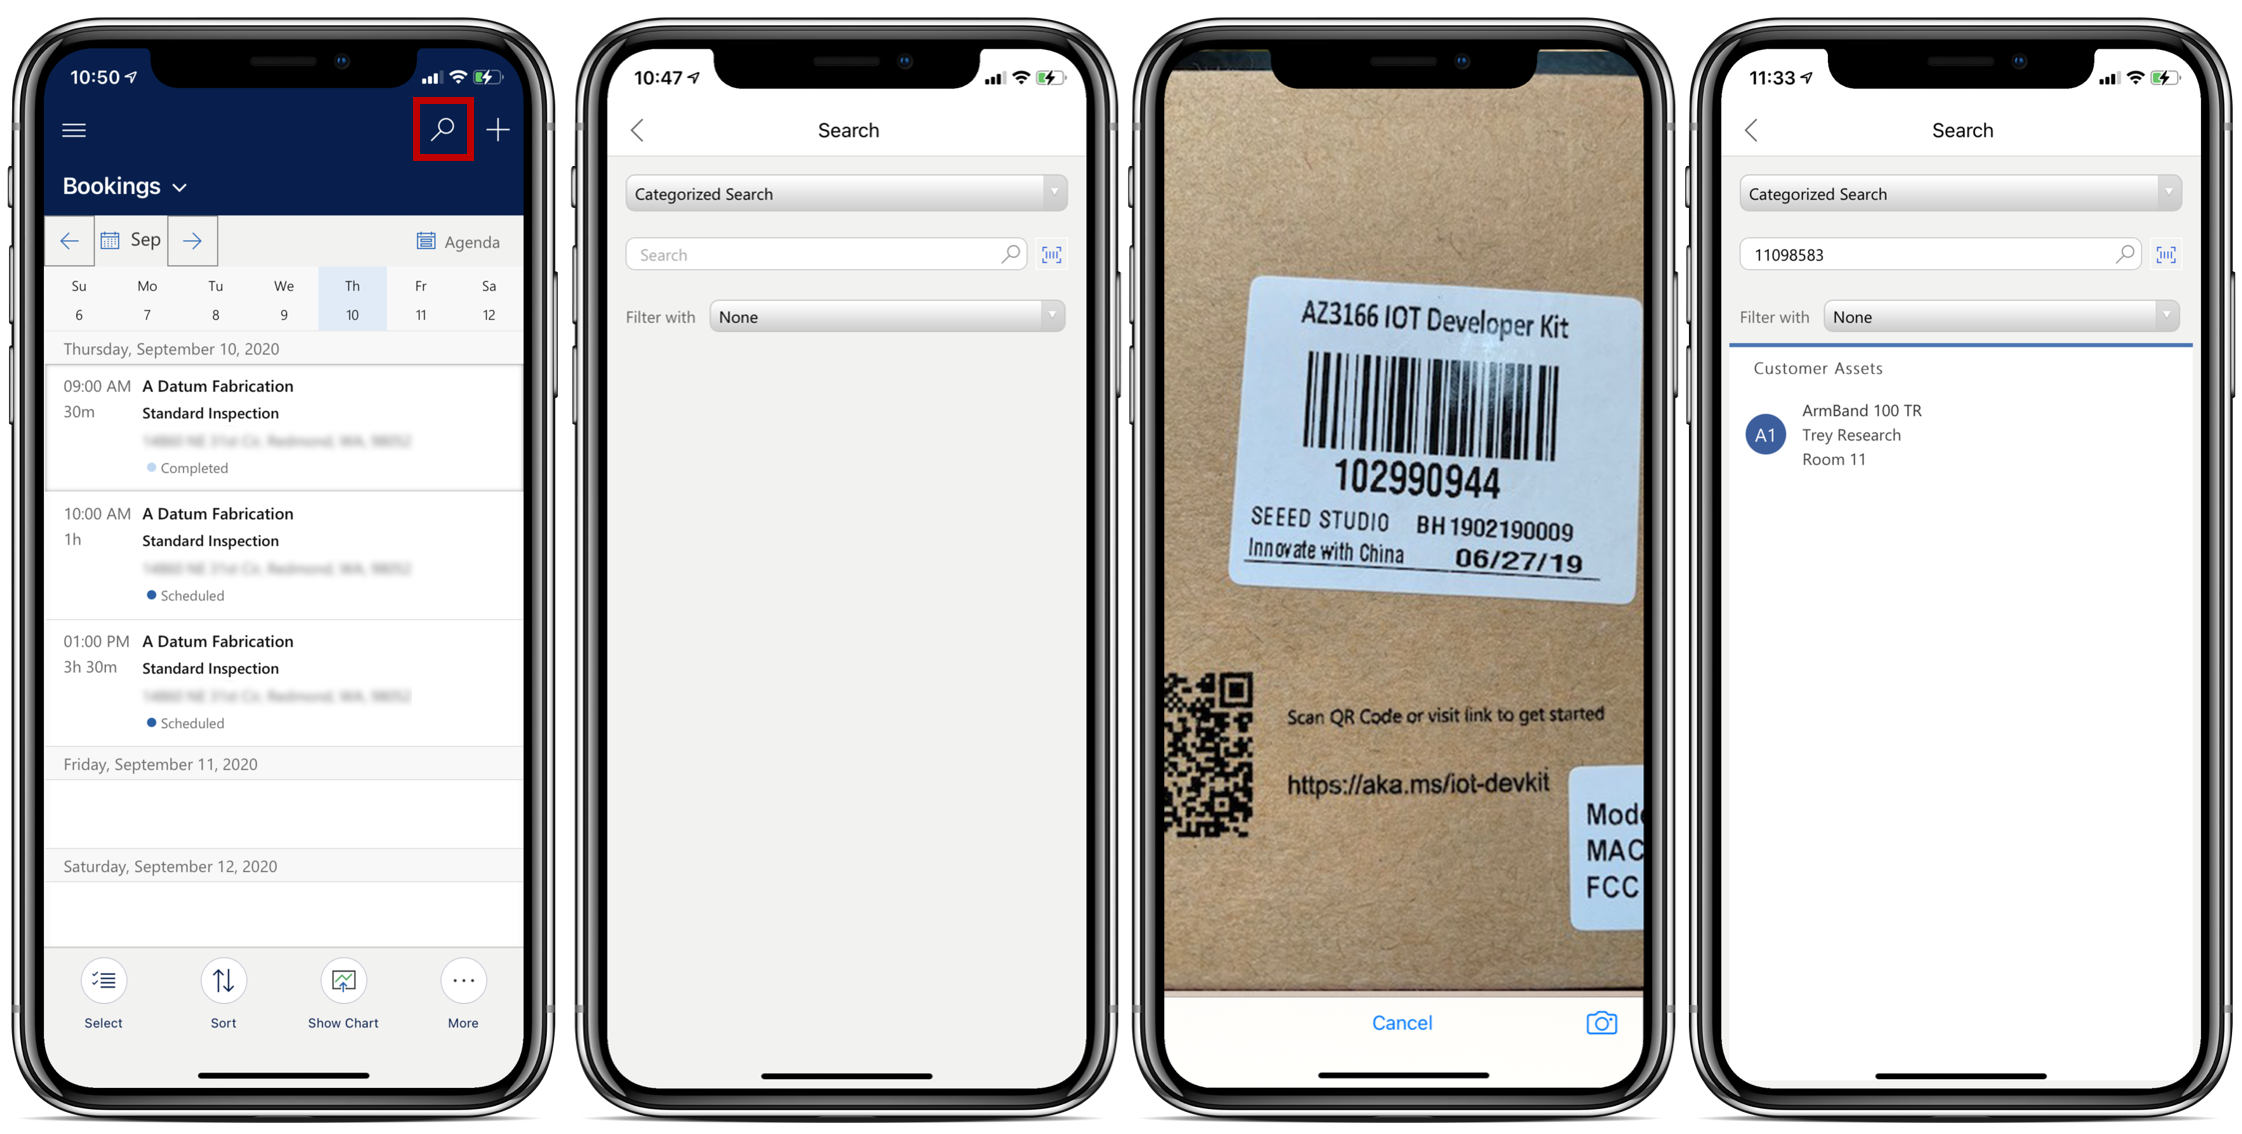 barcode reader iphone